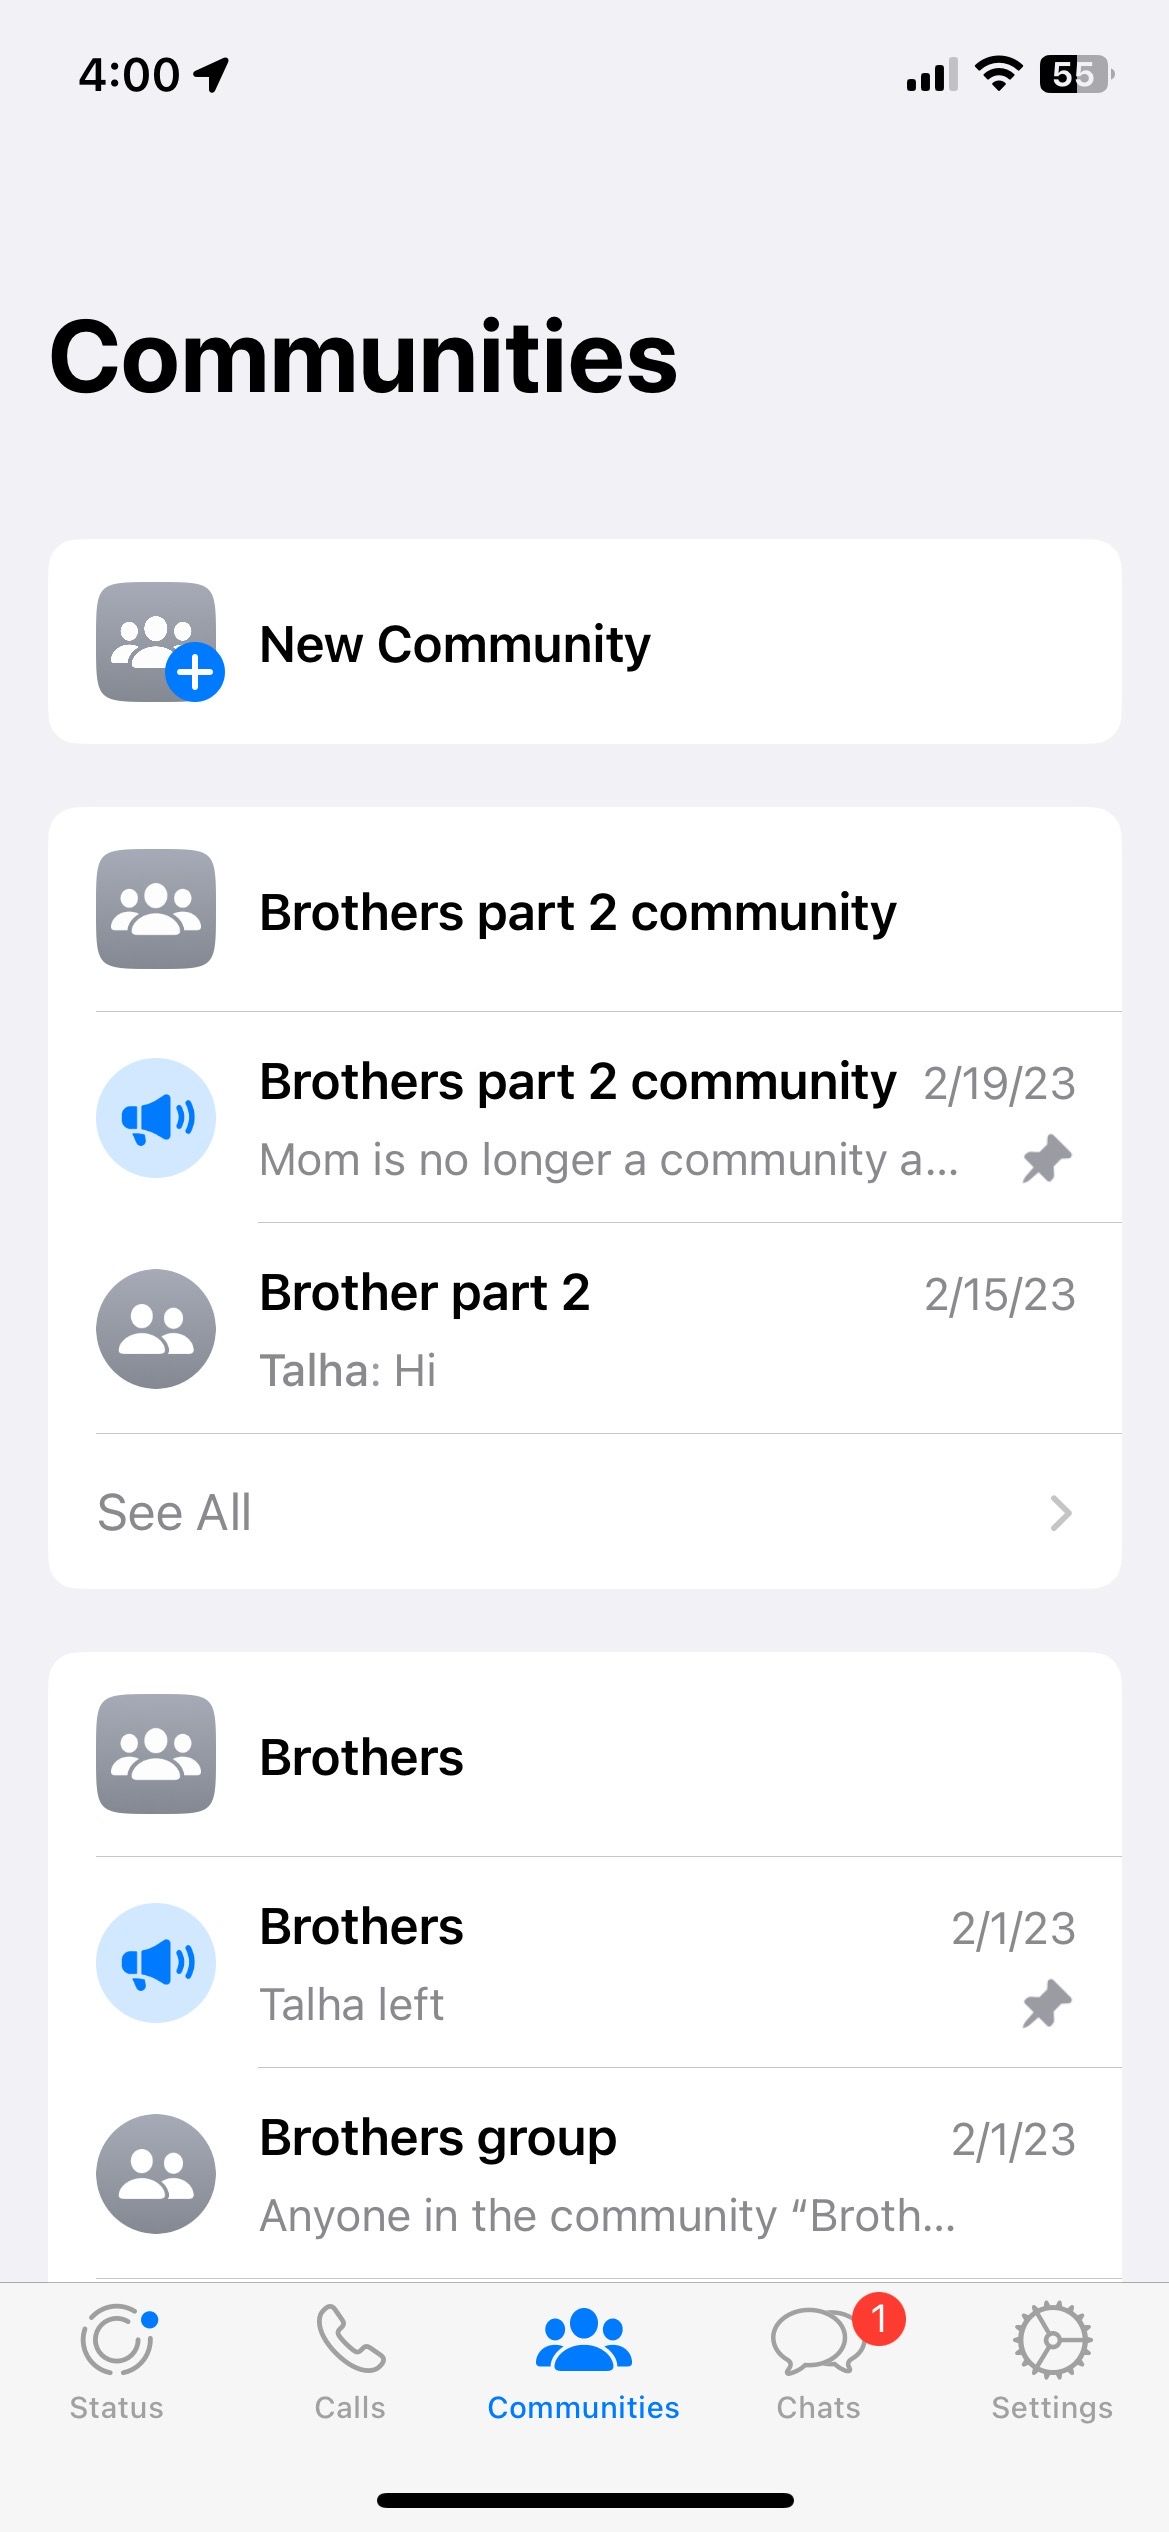 WhatsApp Communities section